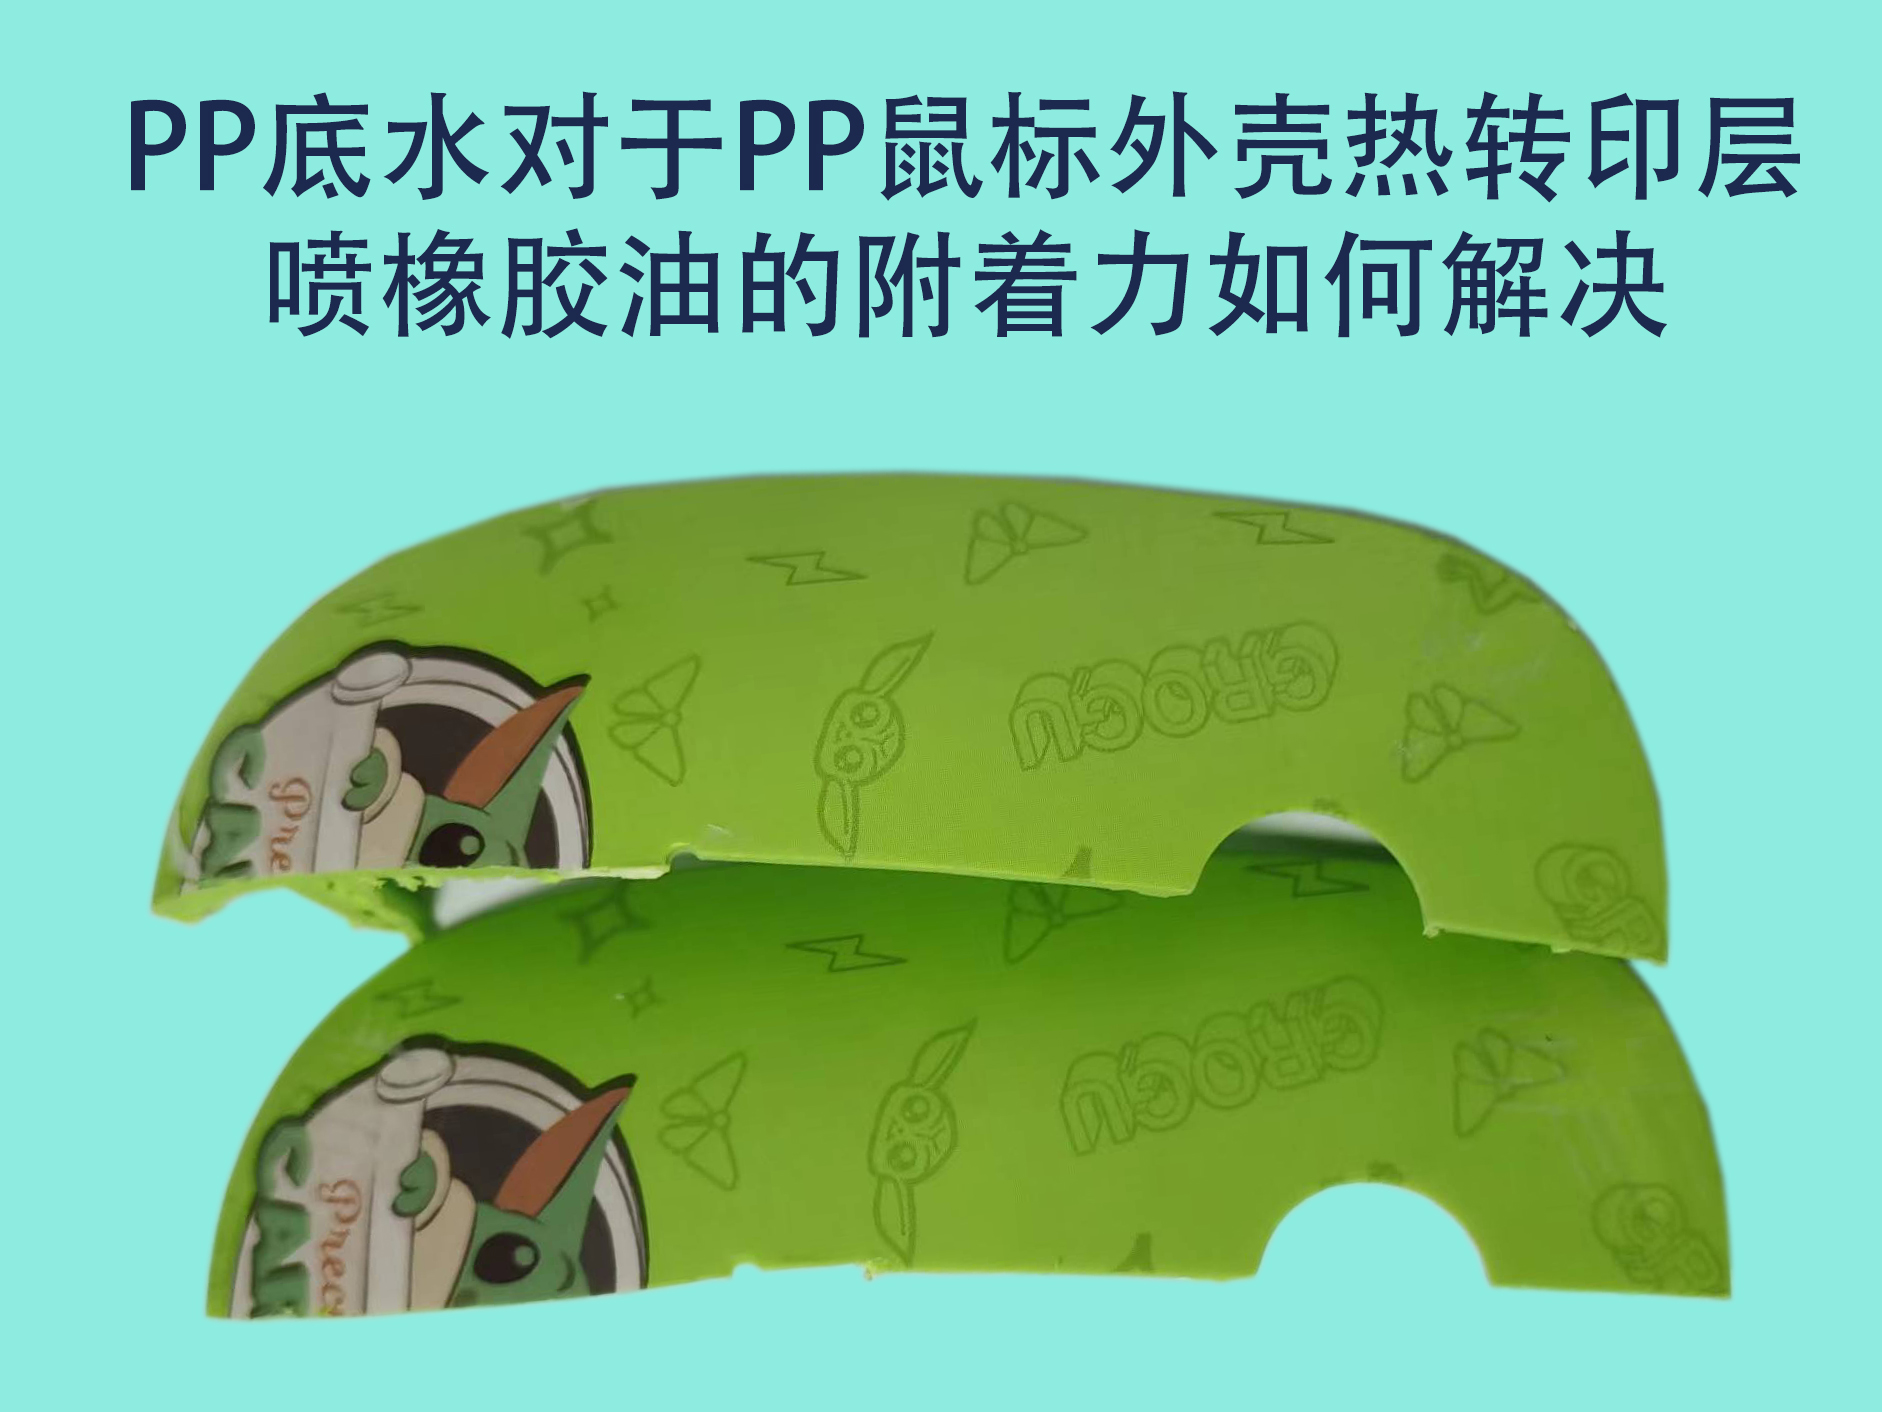 PP底水（处理剂）对于PP鼠标外壳热转印层喷橡胶油（手感漆）的附着力如何解决？